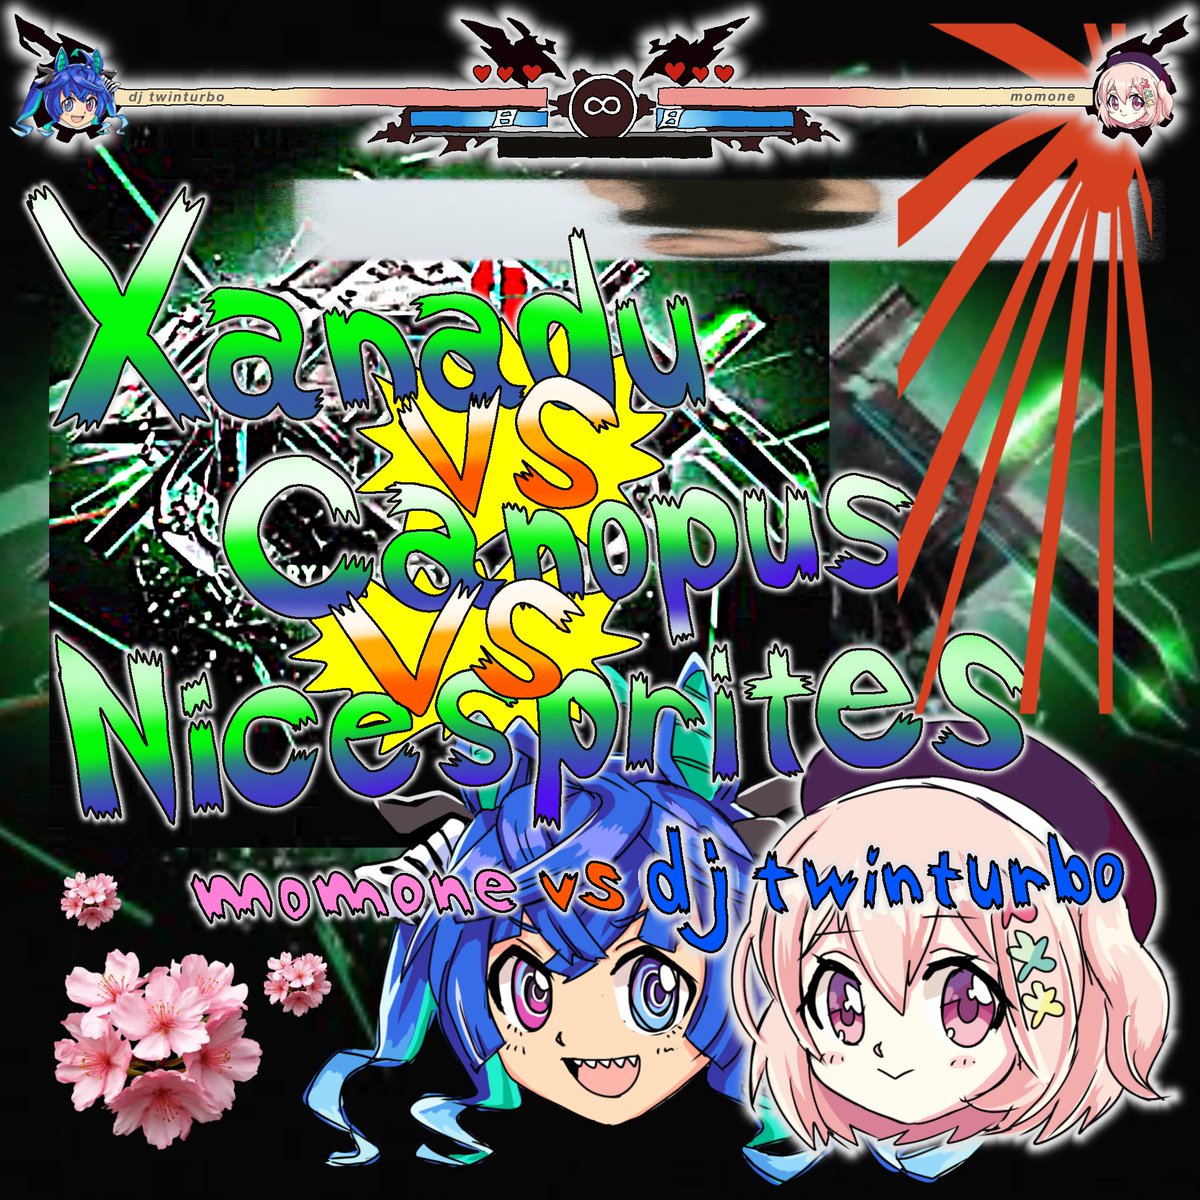 momone vs dj twinturbo - Xanadu vs Canopus vs Nice sprites artwork by @oniguruma_ soundcloud.com/nameruna/momon…